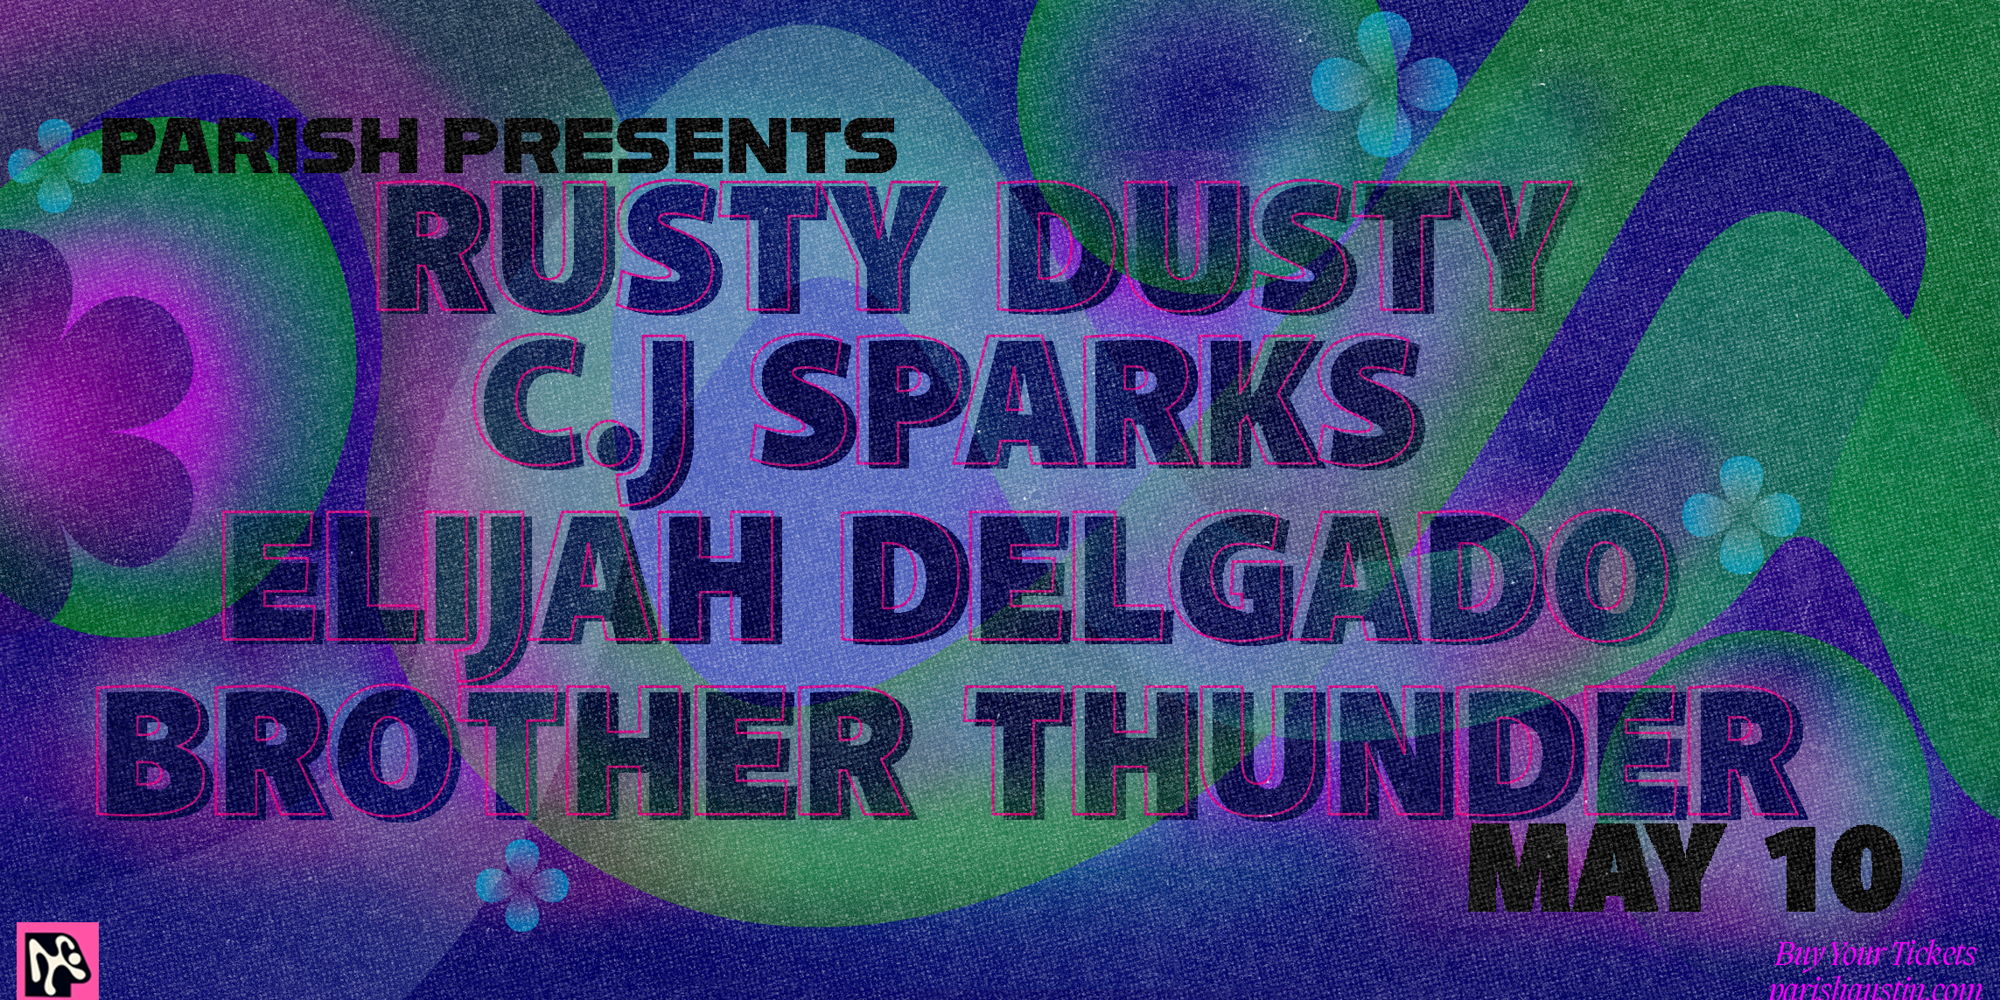 Parish Presents: Rusty Dusty, C.J. Sparks, Elijah Delgado & Brother Thunder at Parish on 5/10 promotional image